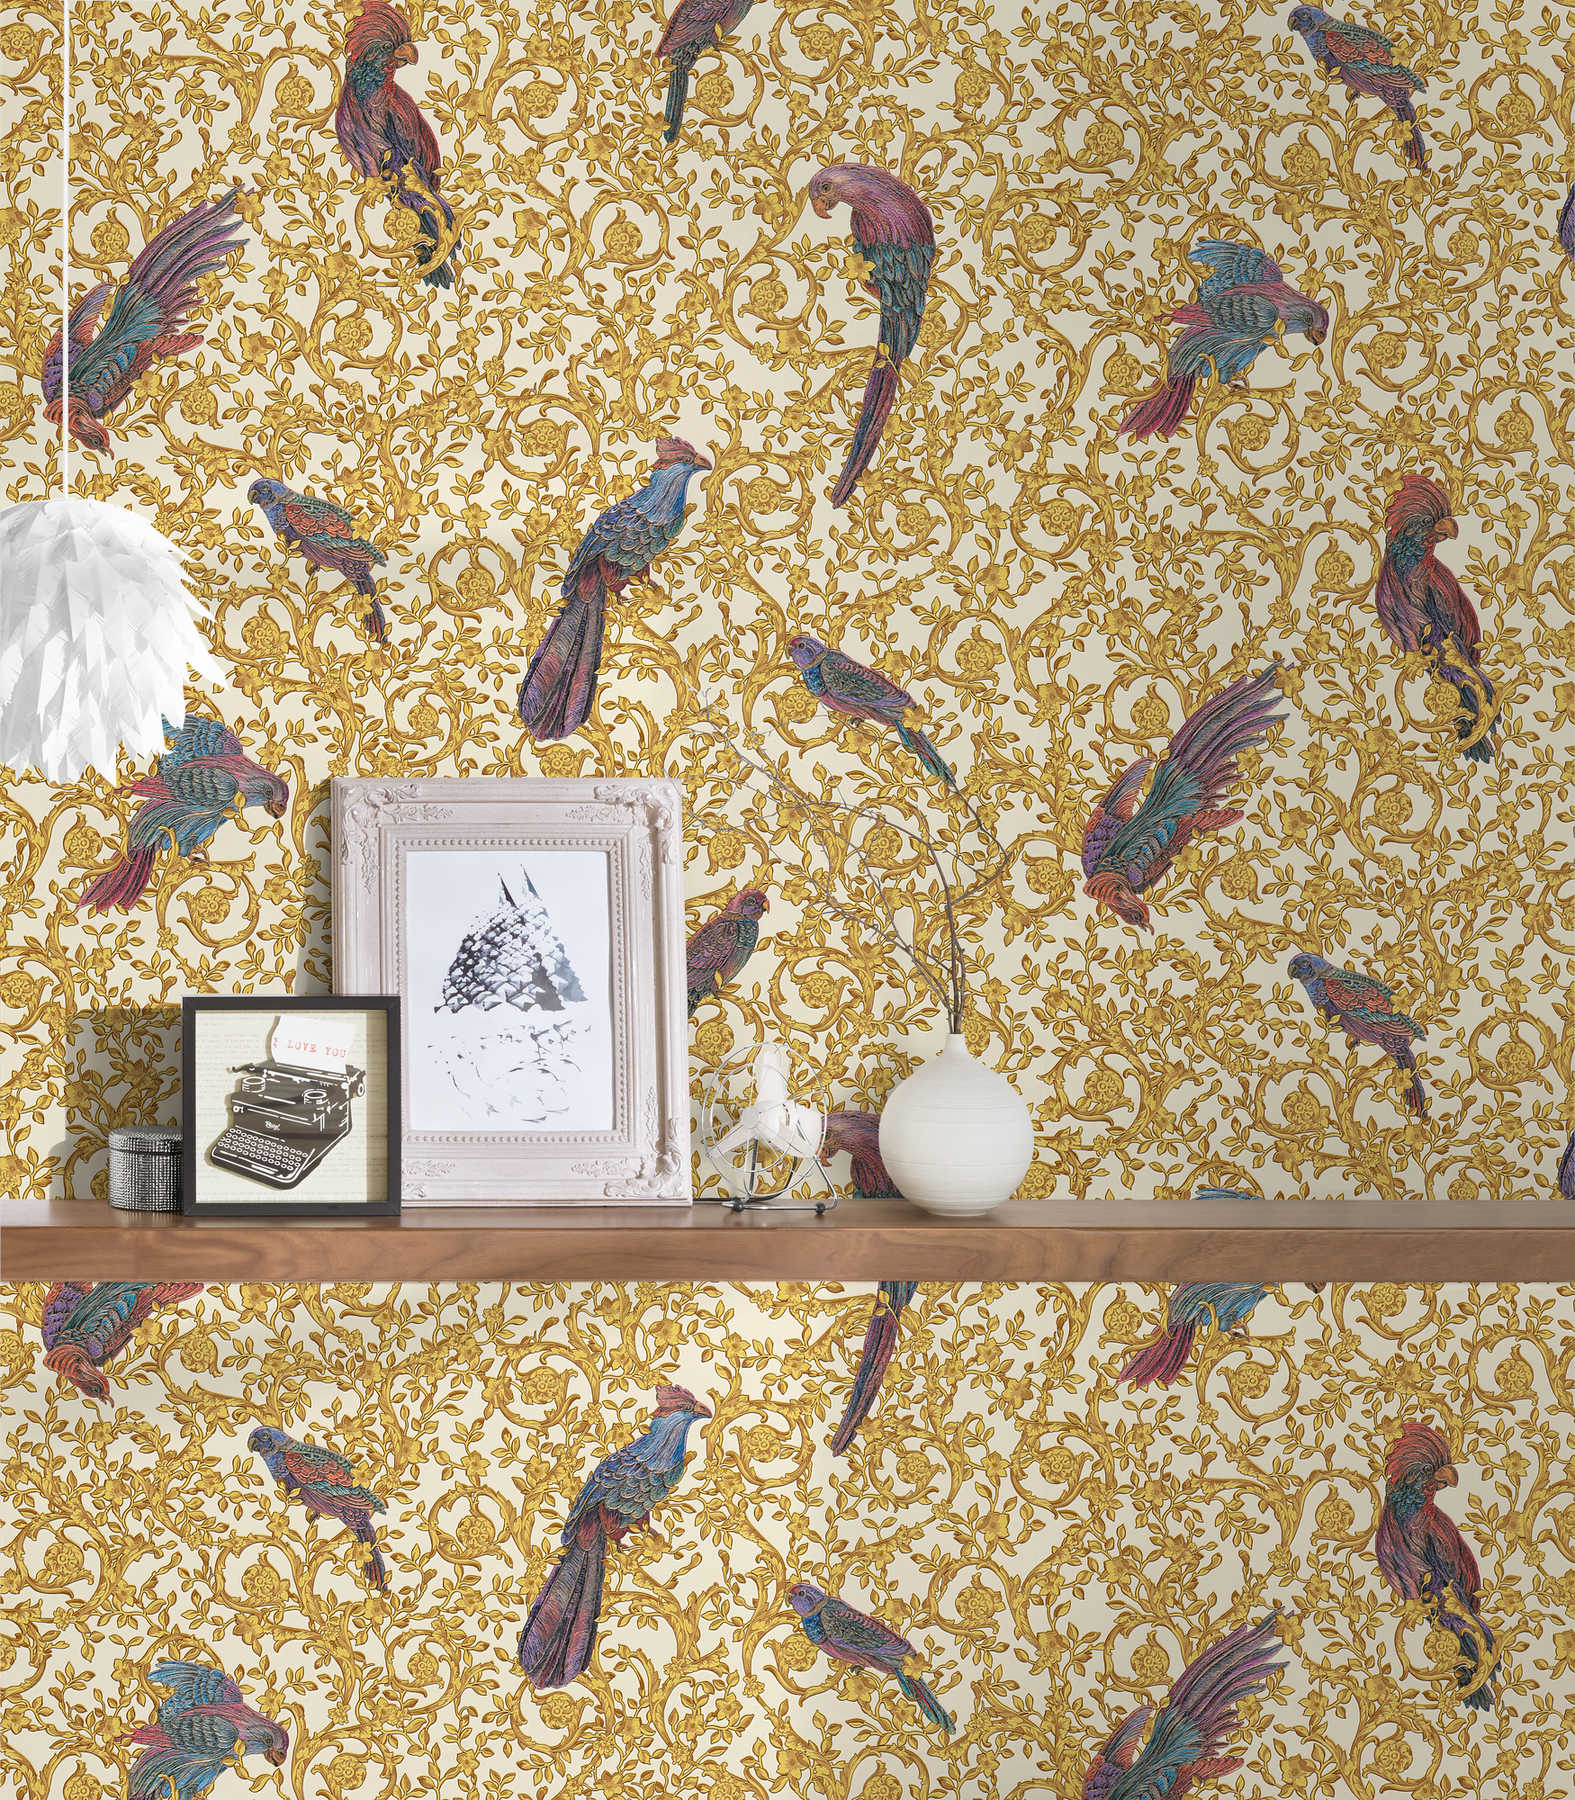             VERSACE Home wallpaper paradise birds & golden accents - gold, purple, cream
        